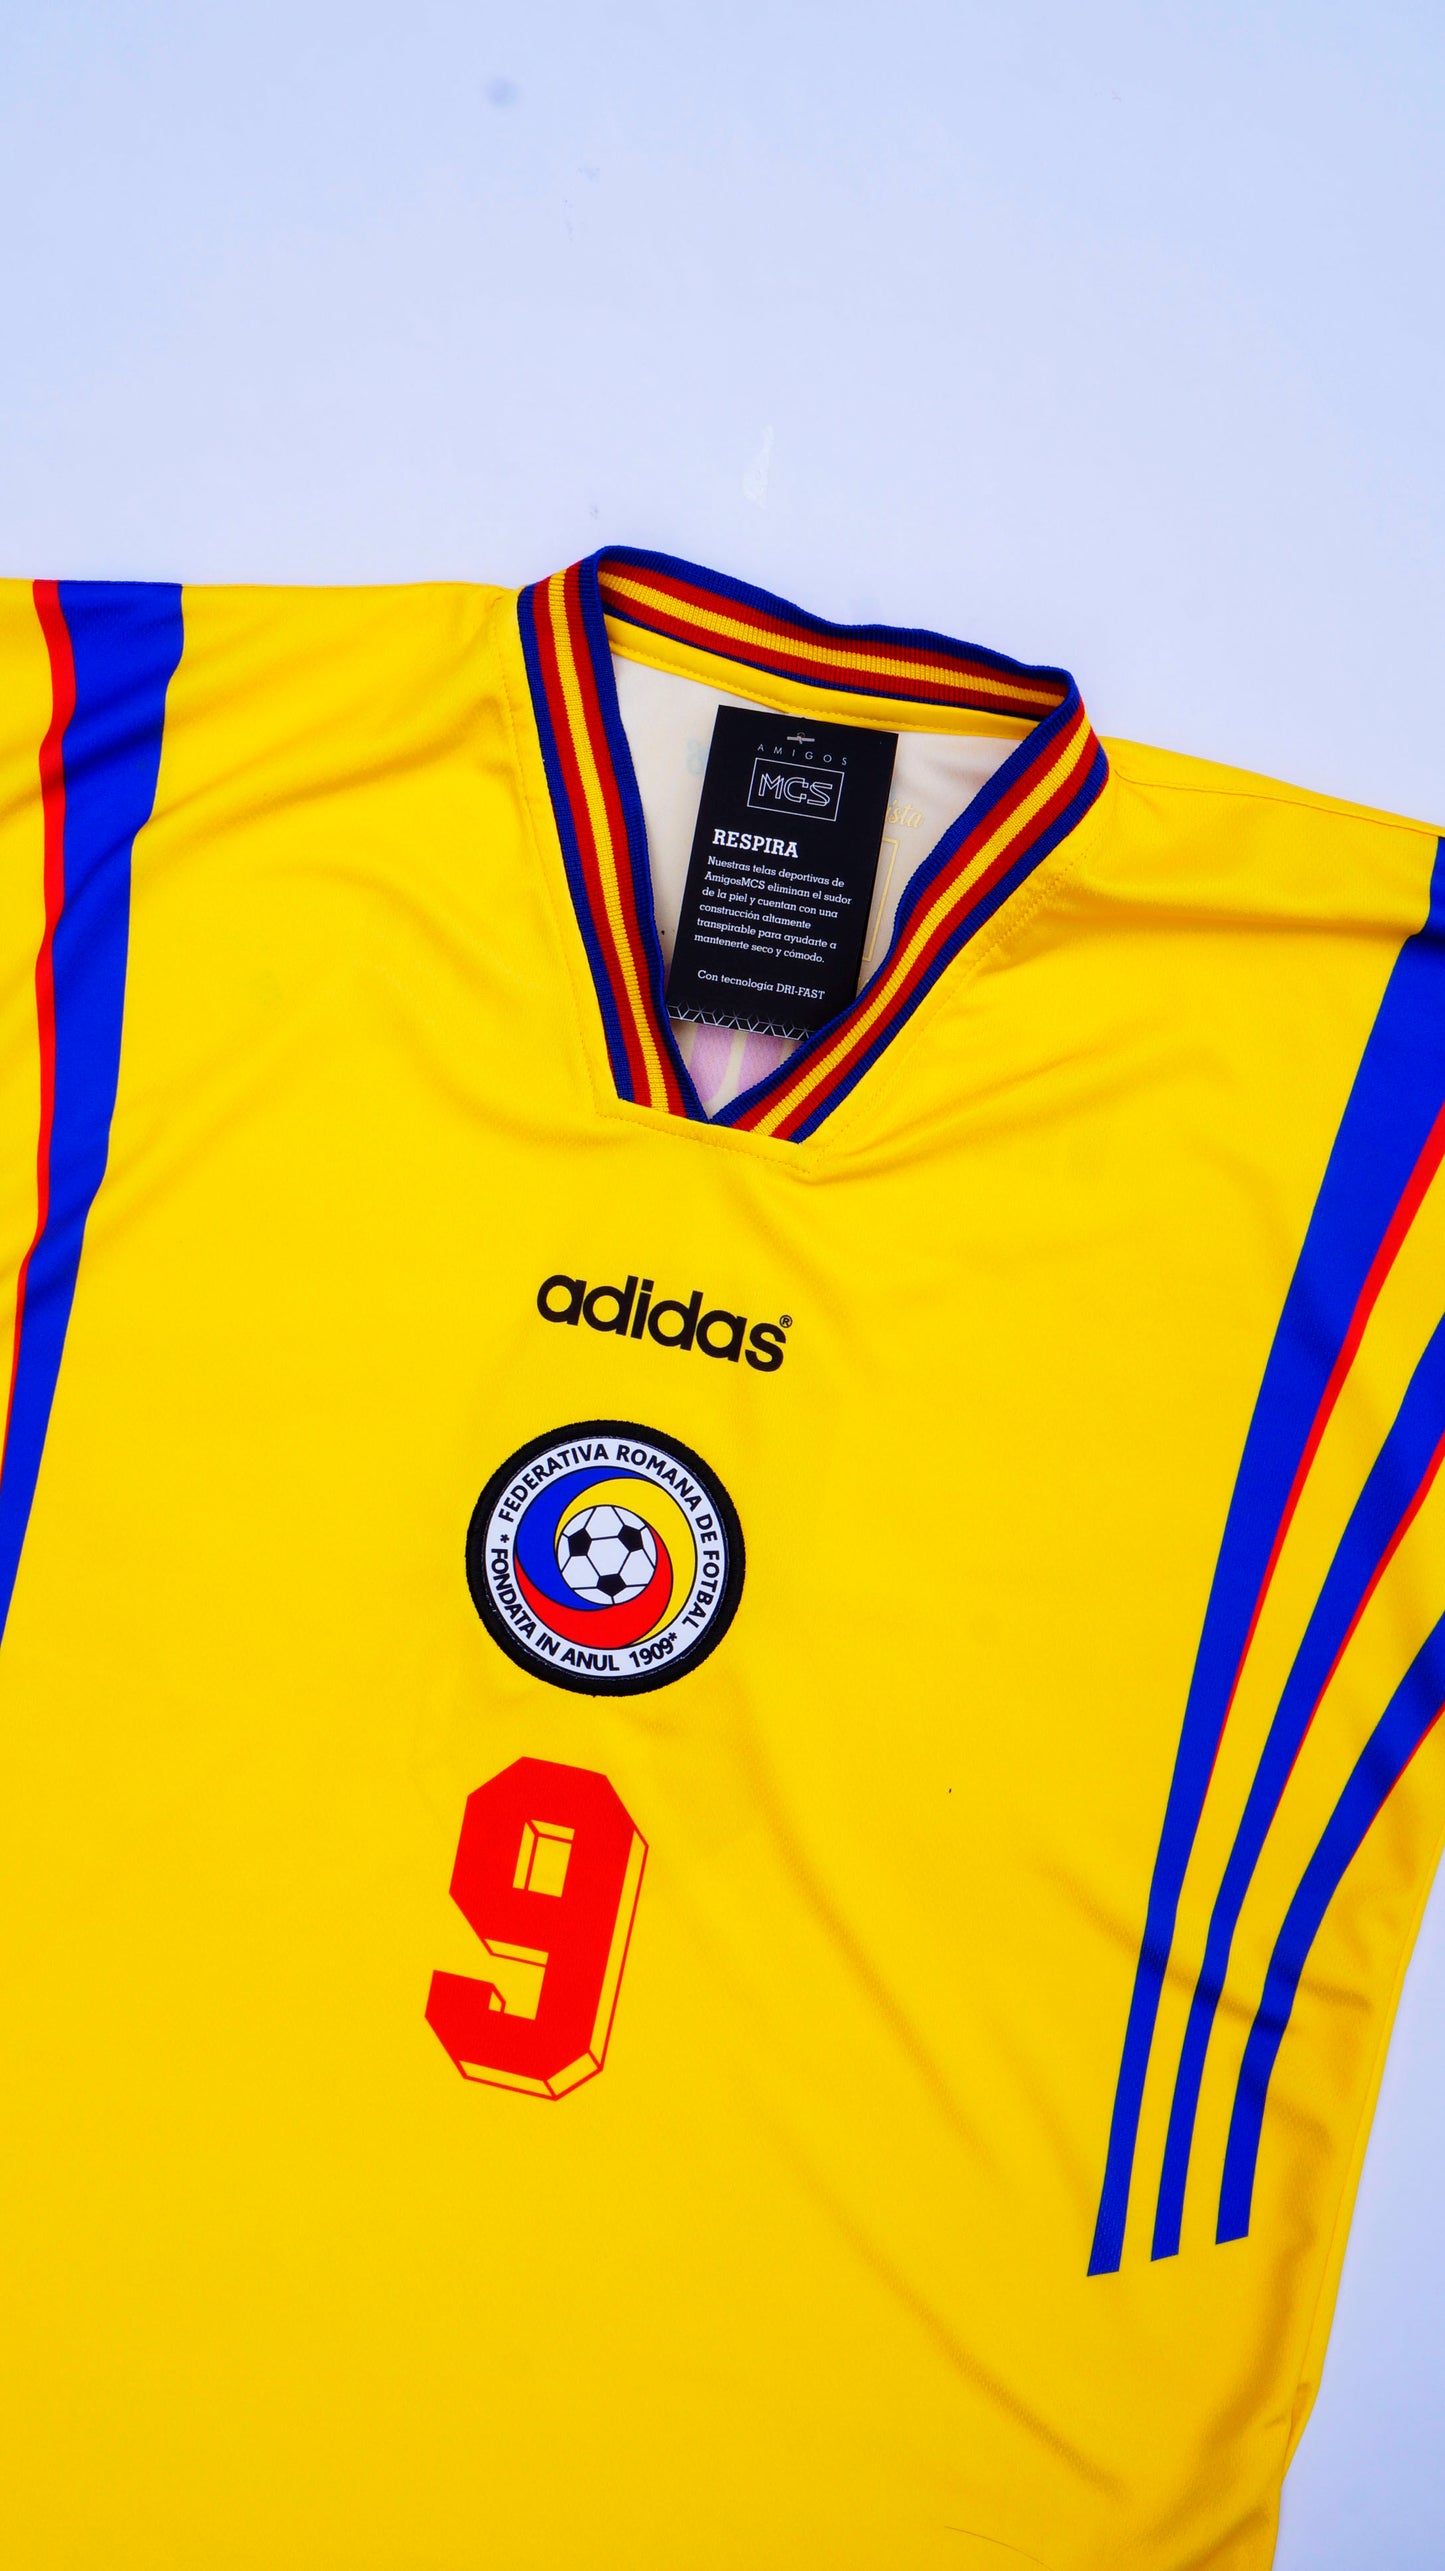 Romania 1996 jersey